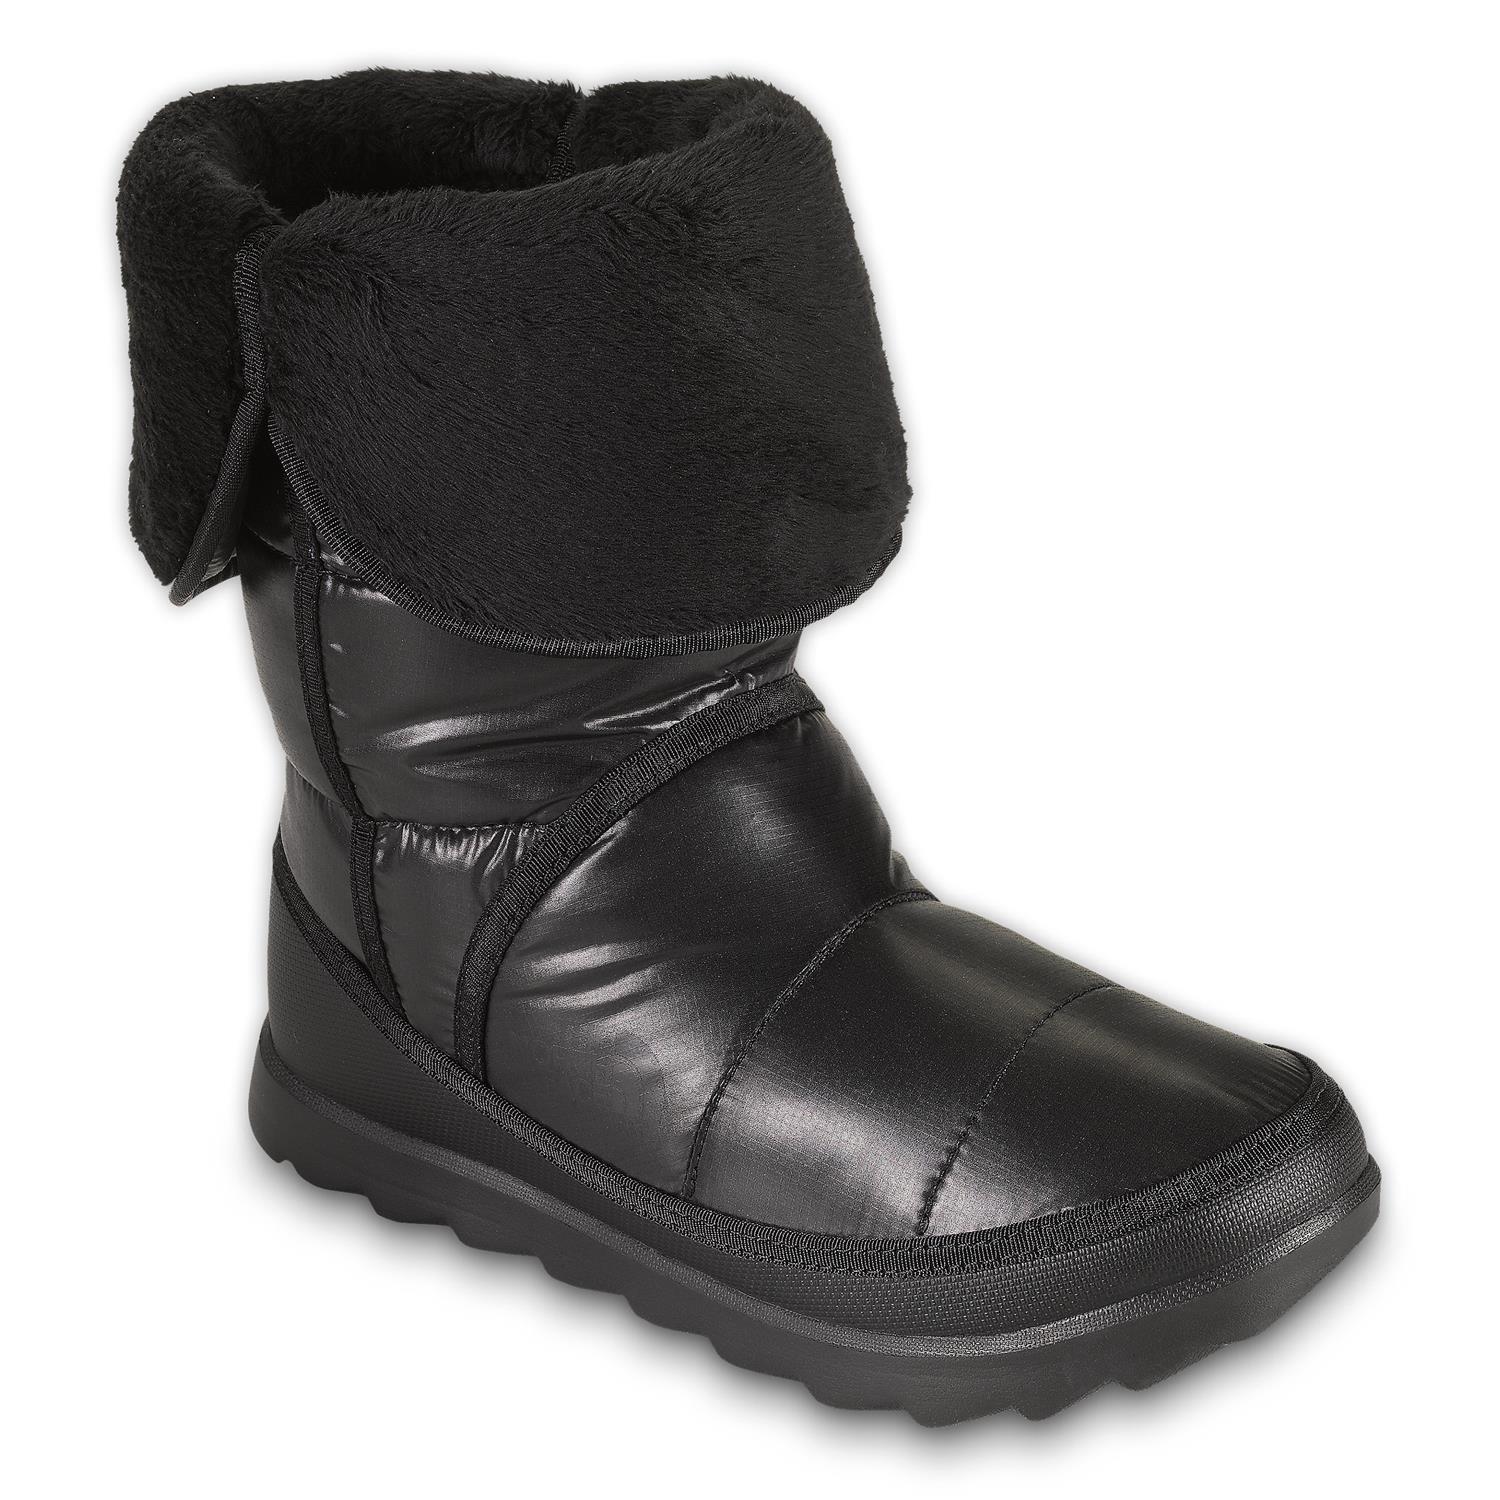 Ladies North Face Snow Boots Sale | NATIONAL SHERIFFS' ASSOCIATION